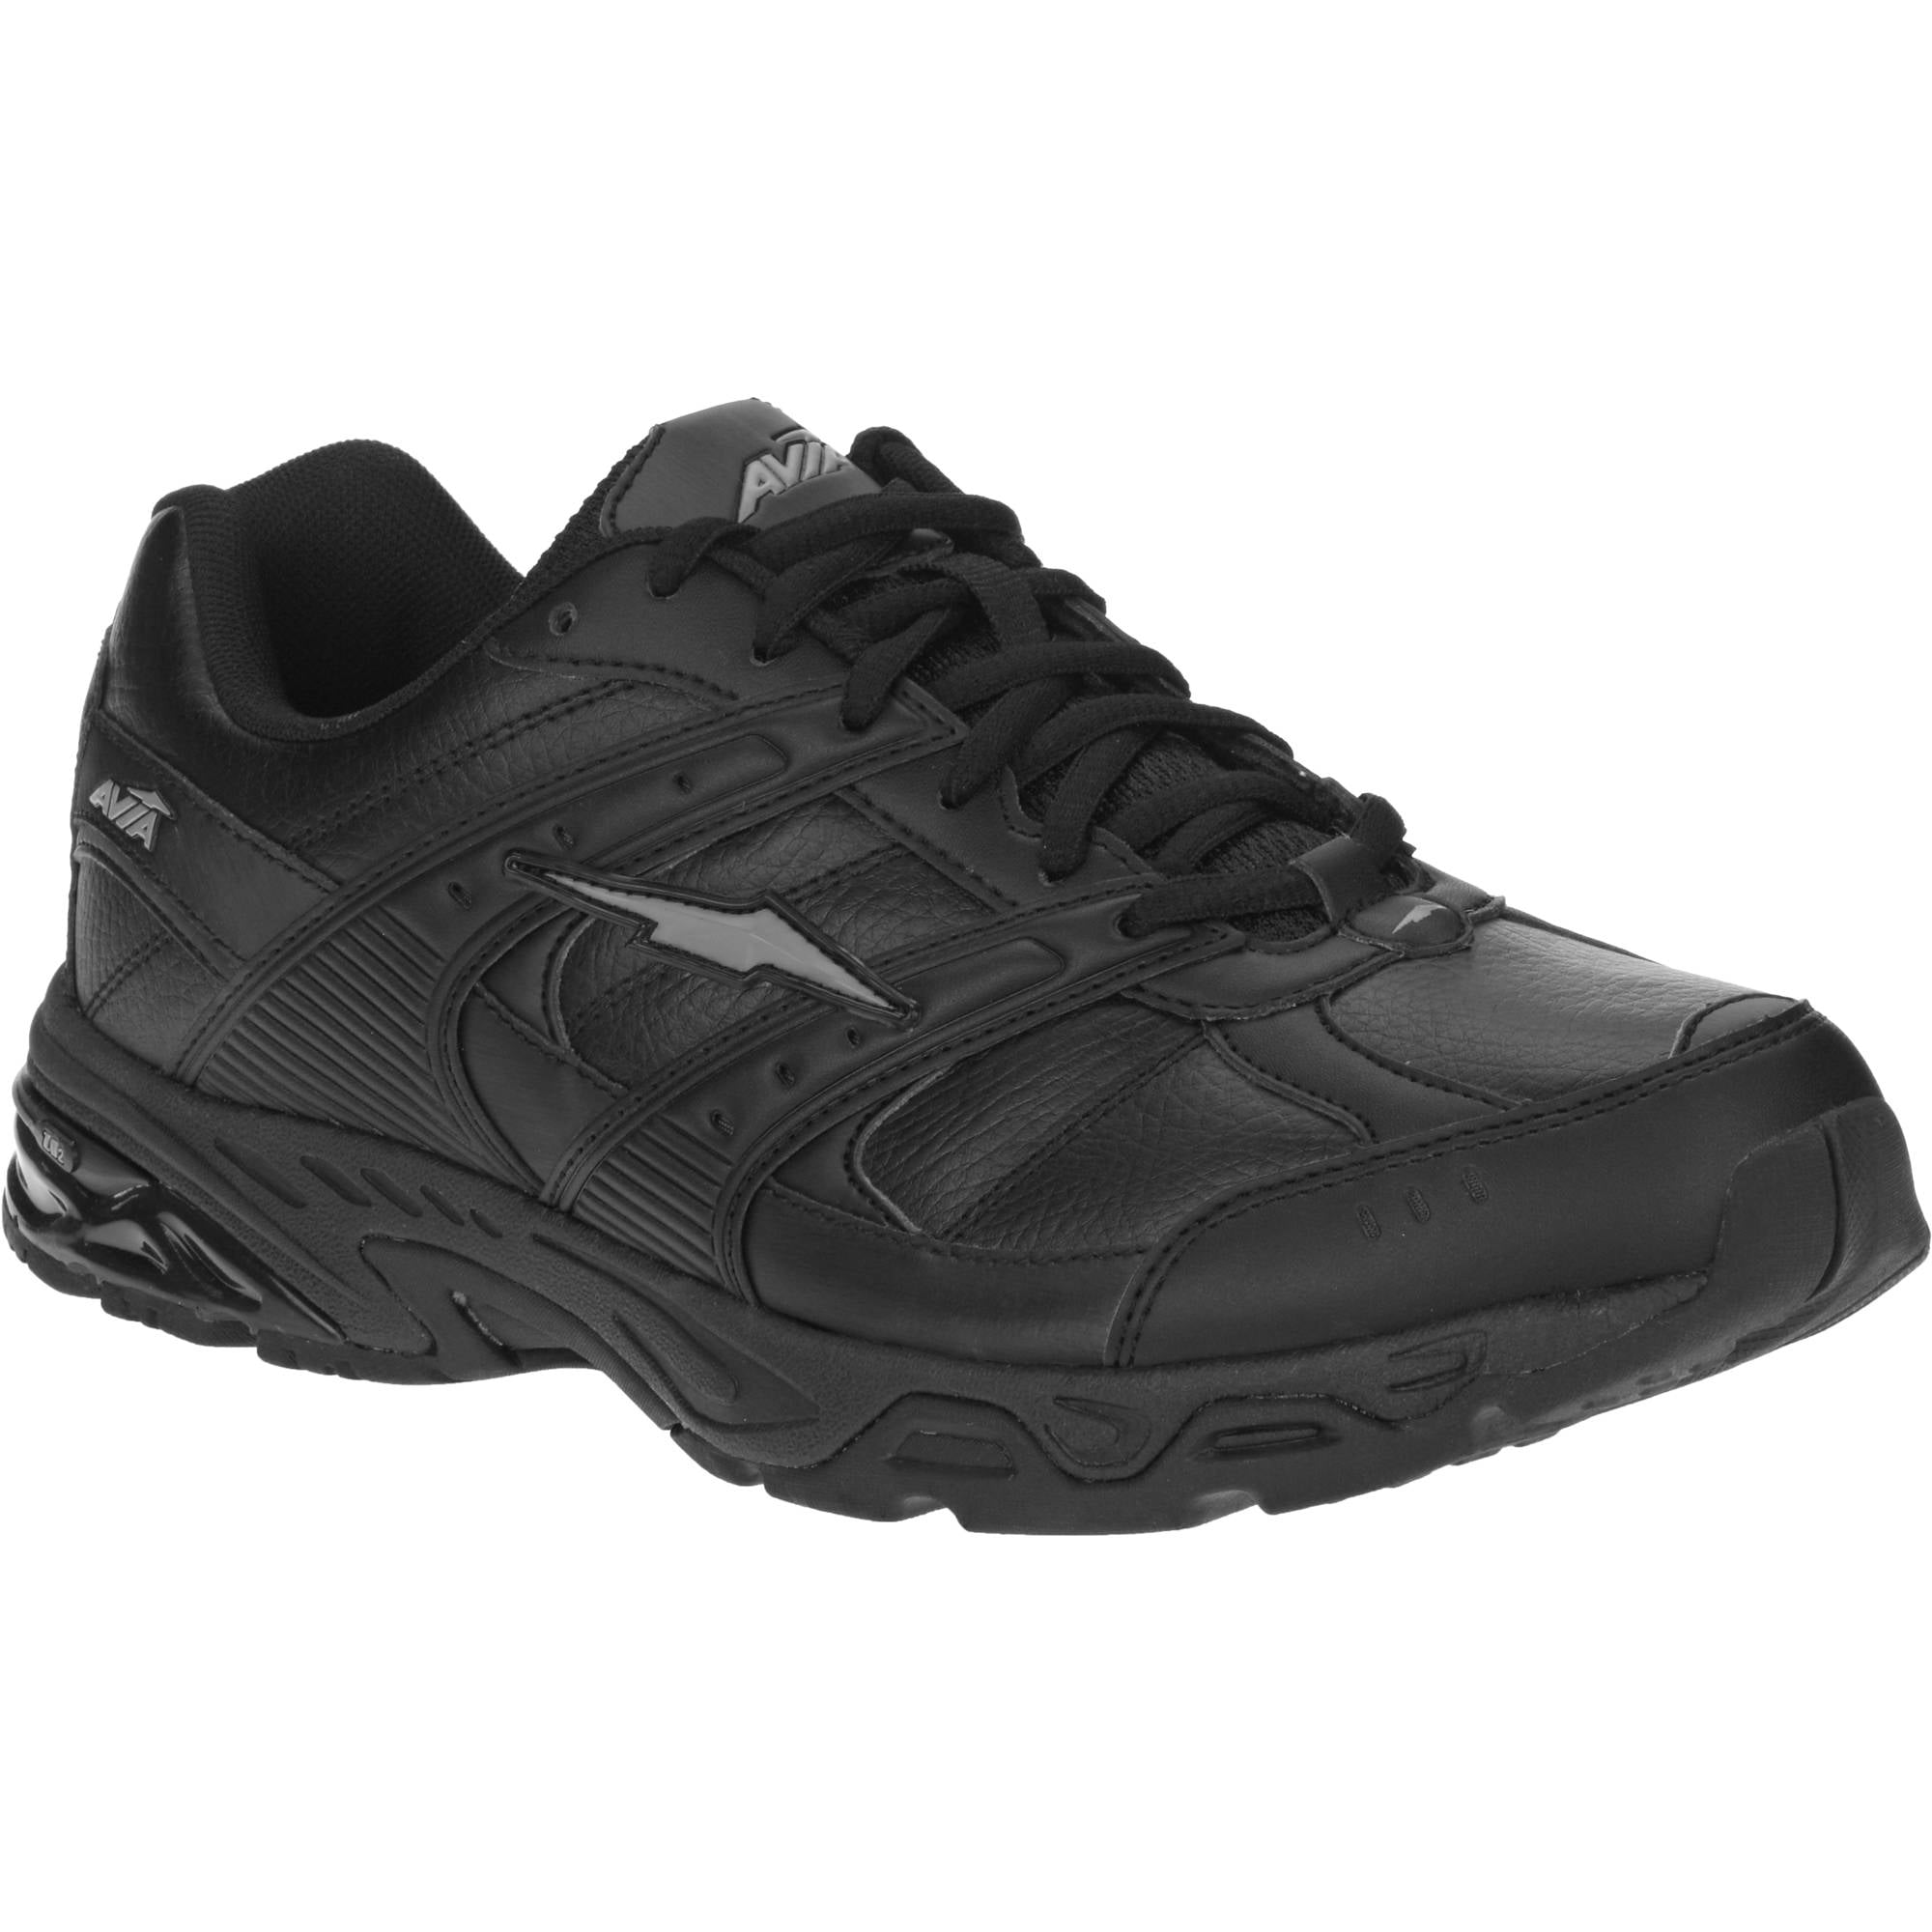 Men's Peter Athletic Shoe - Walmart.com